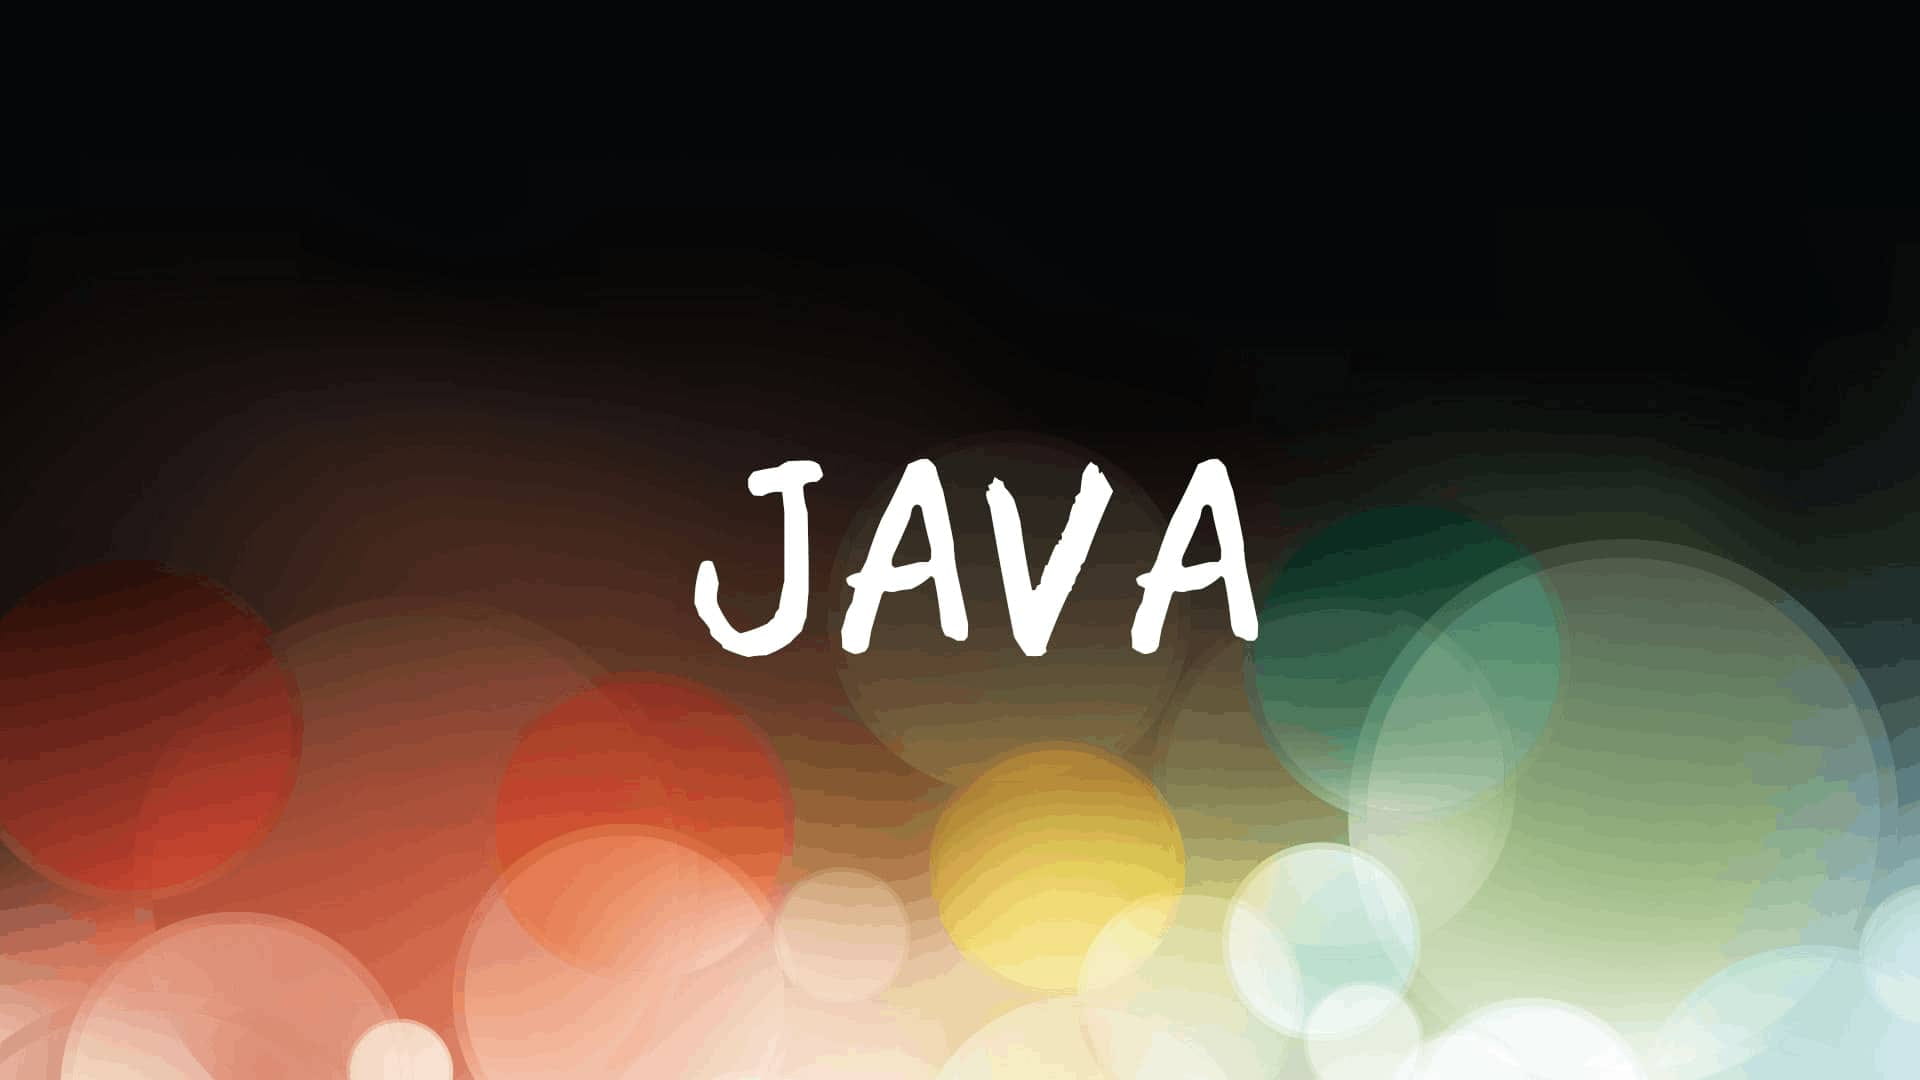 Java中的注解和反射